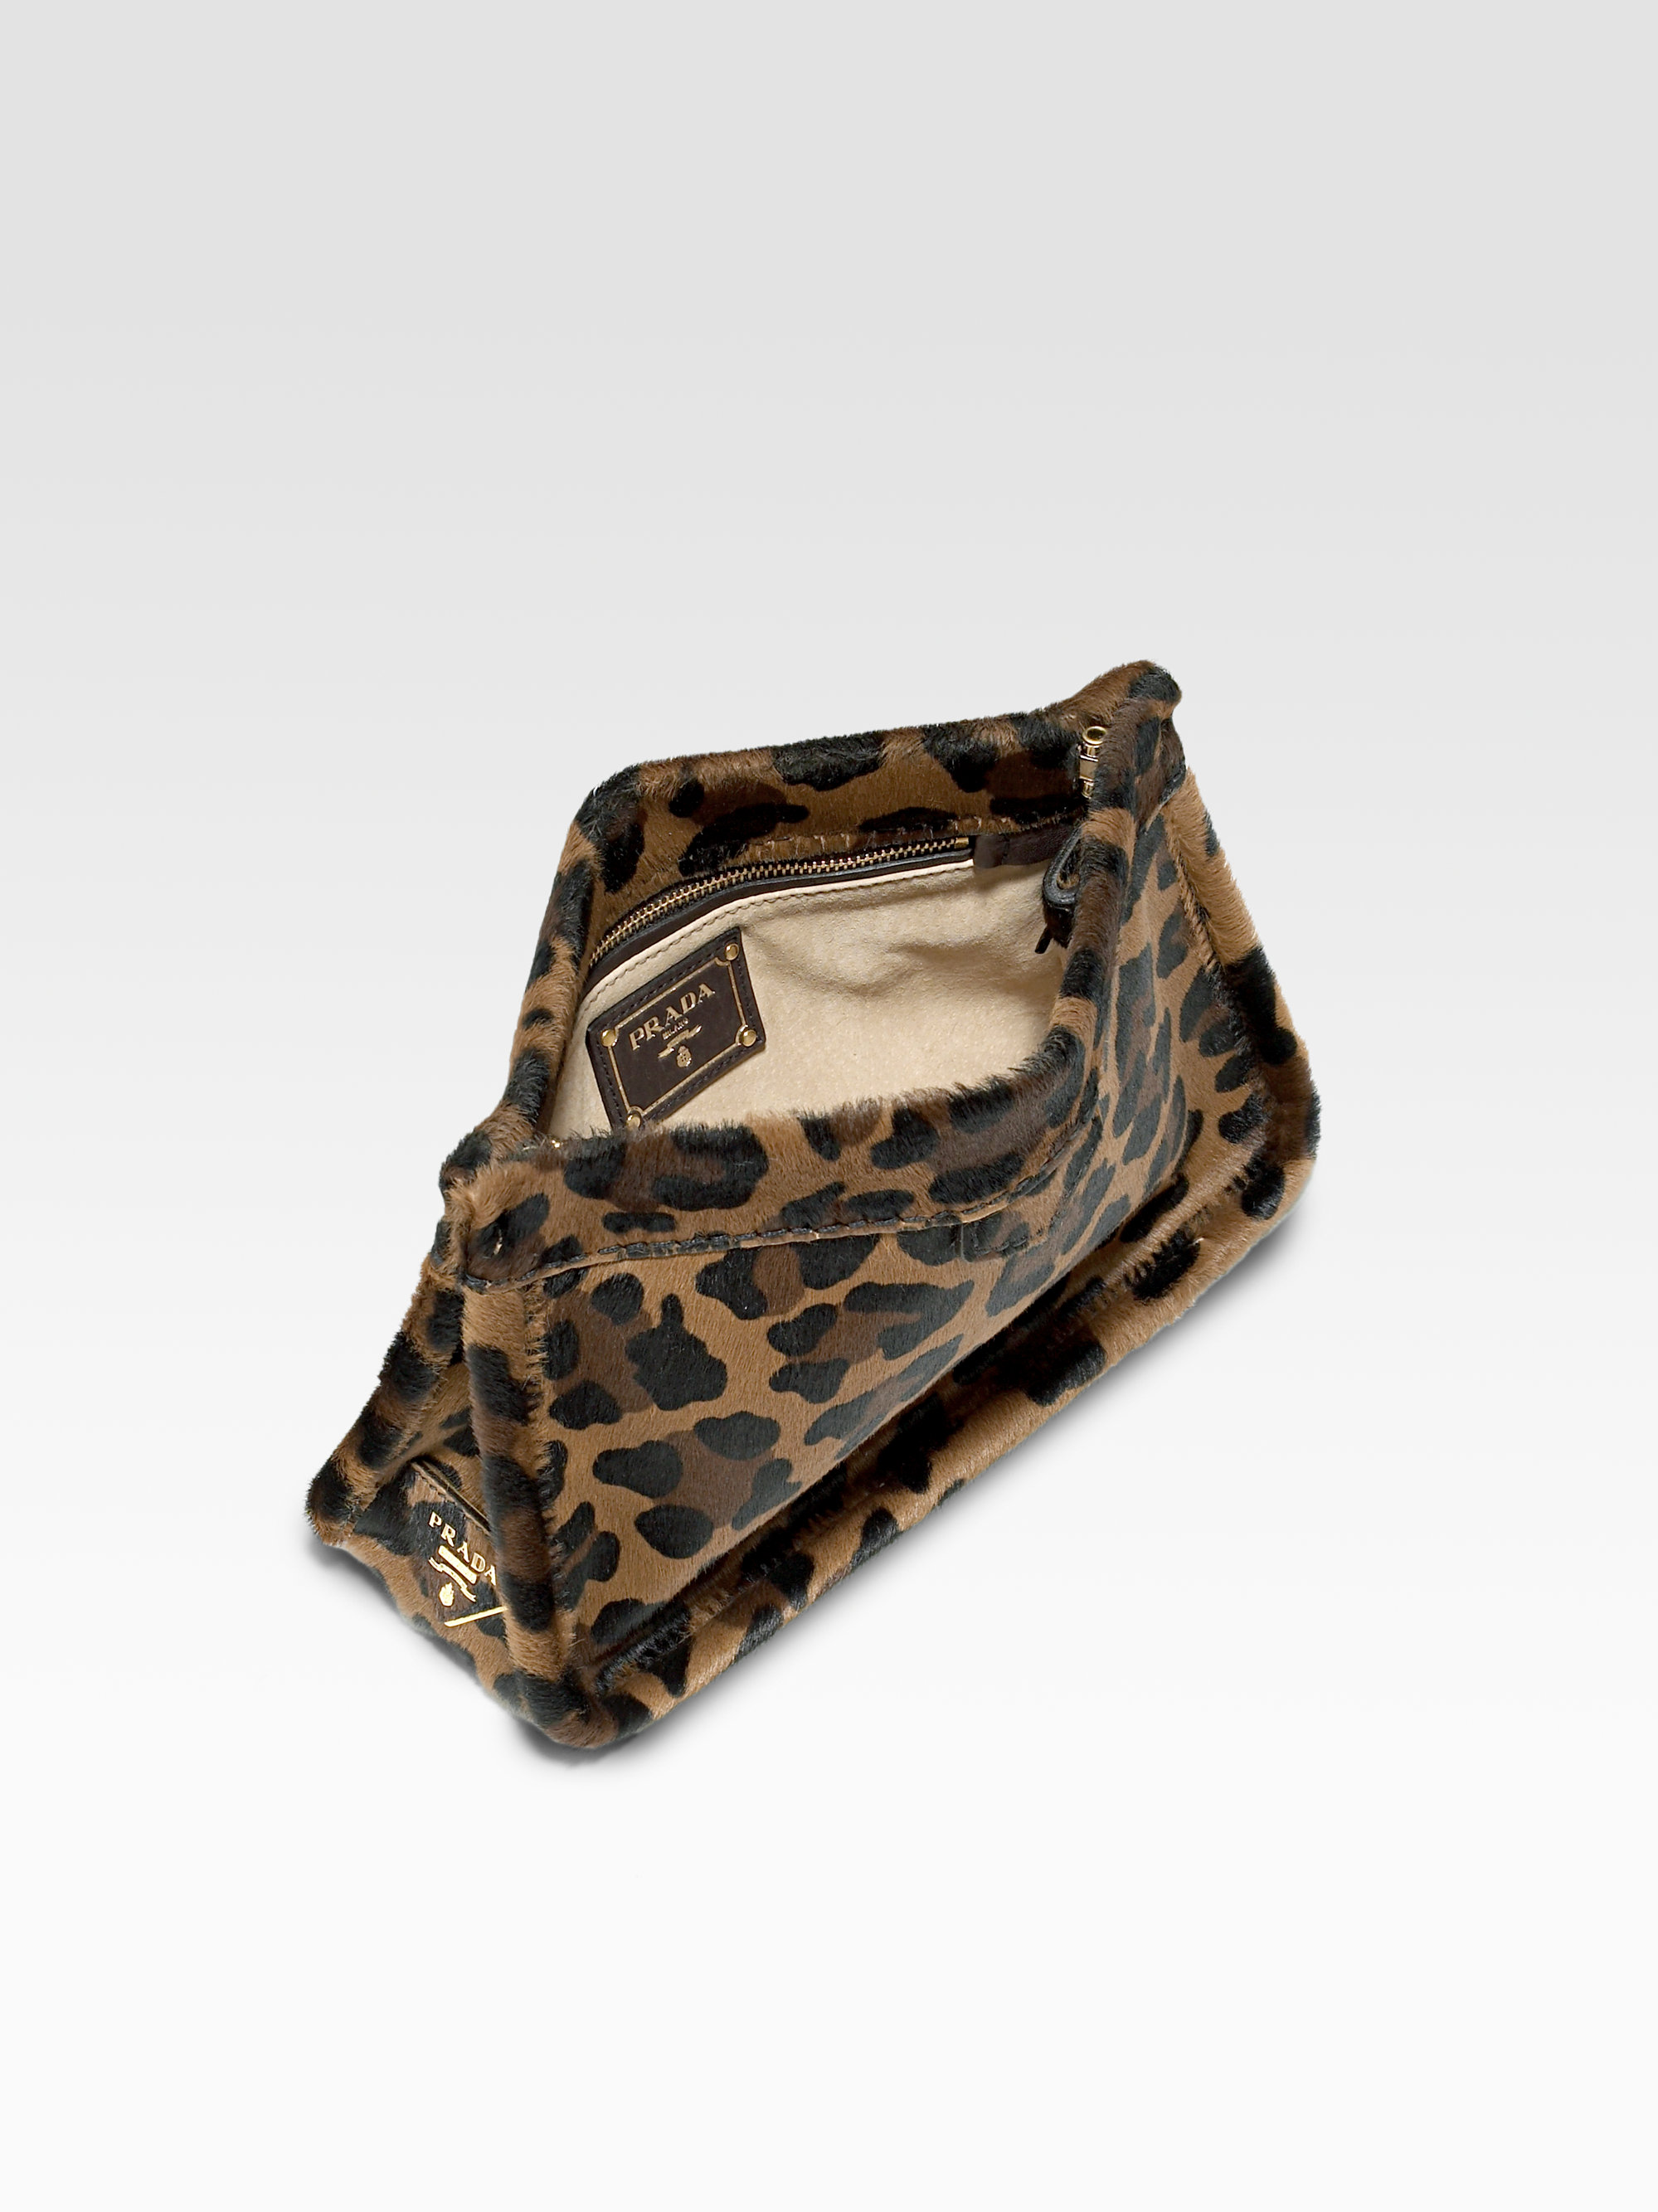 red prada bag leather - Prada Cavallino Printed Haircalf Clutch in Animal (leopard) | Lyst